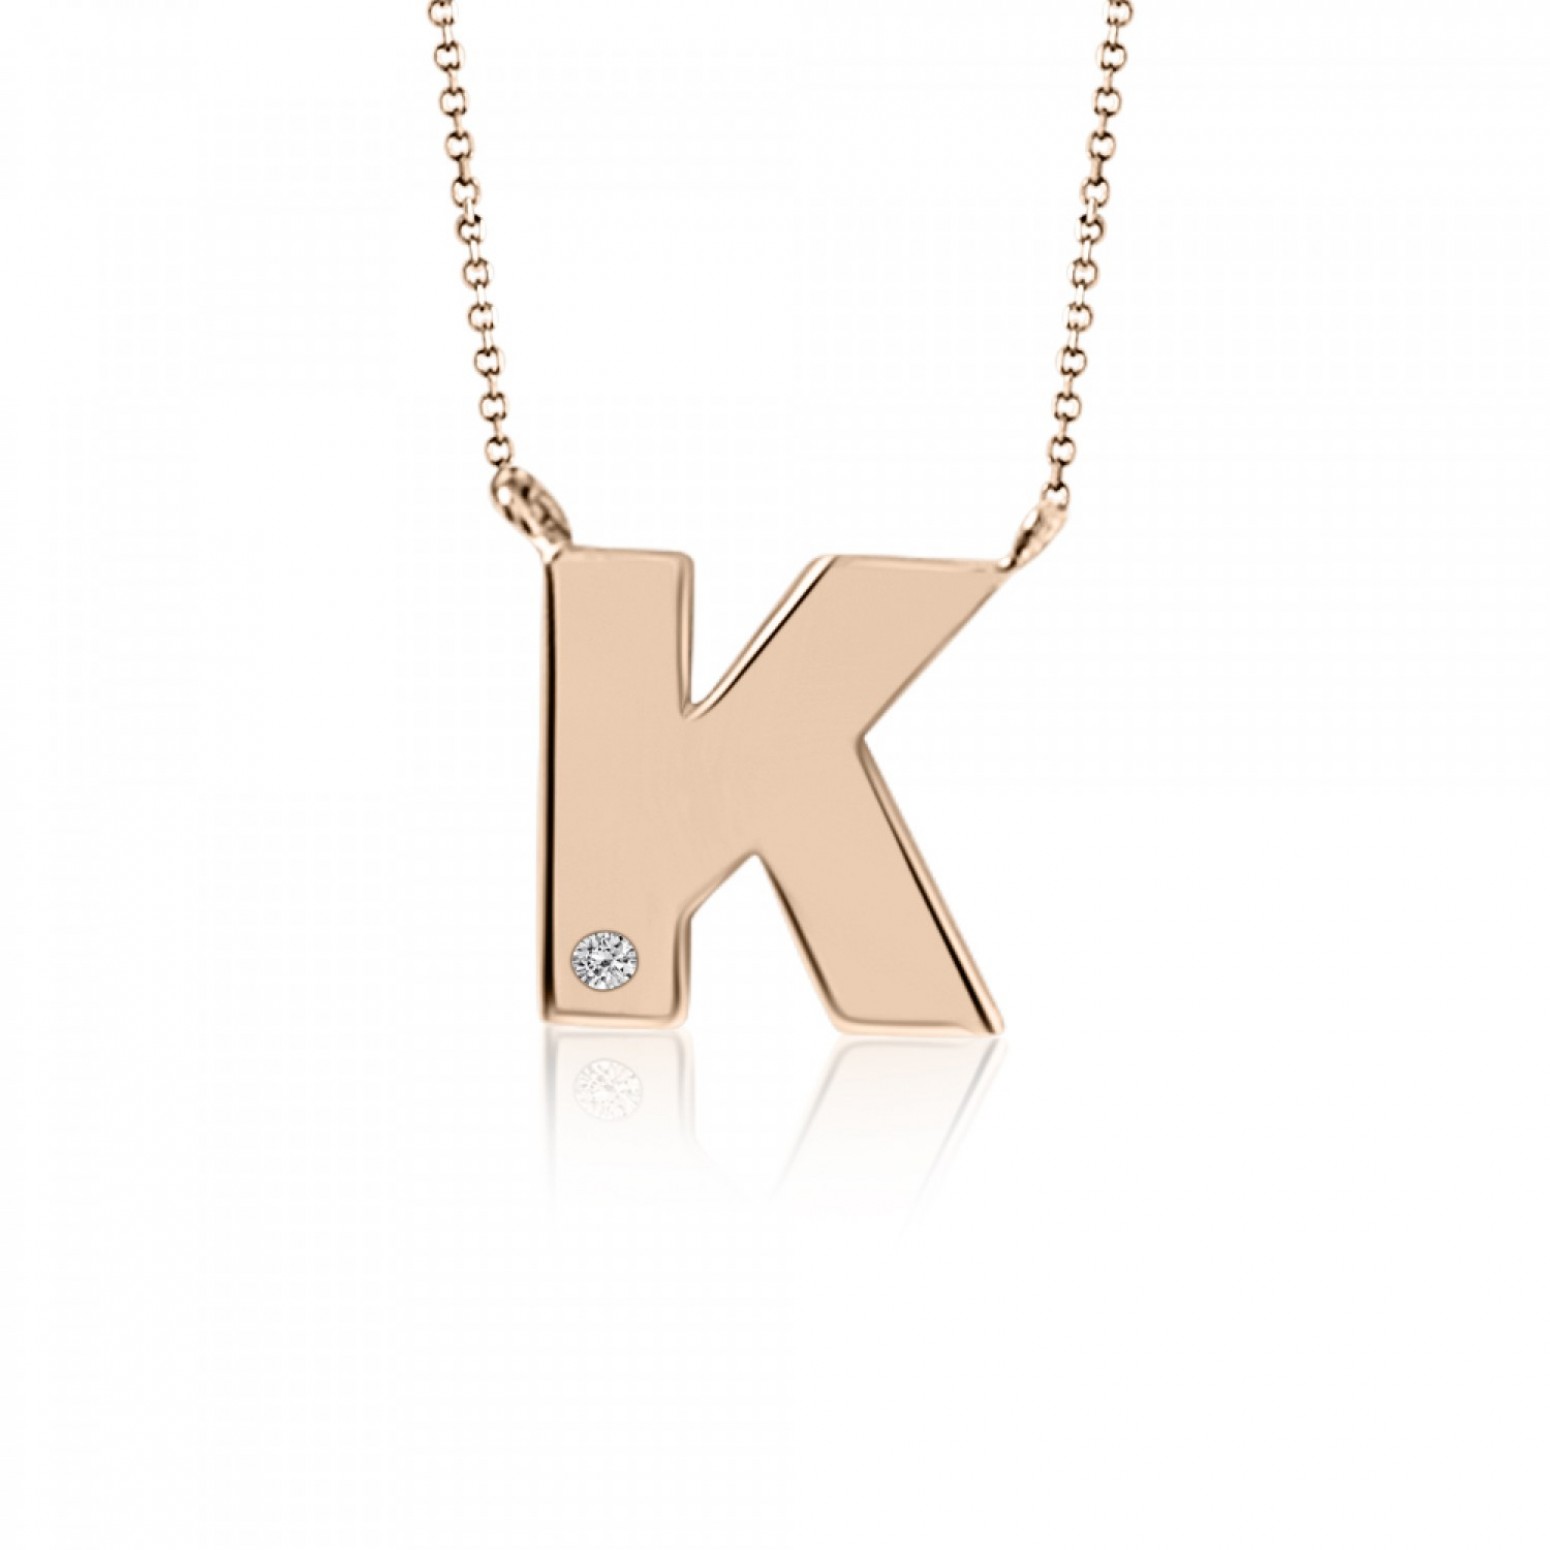 Monogram necklace Κ, Κ9 pink gold with diamond 0.005ct, VS2, H ko4887 NECKLACES Κοσμηματα - chrilia.gr